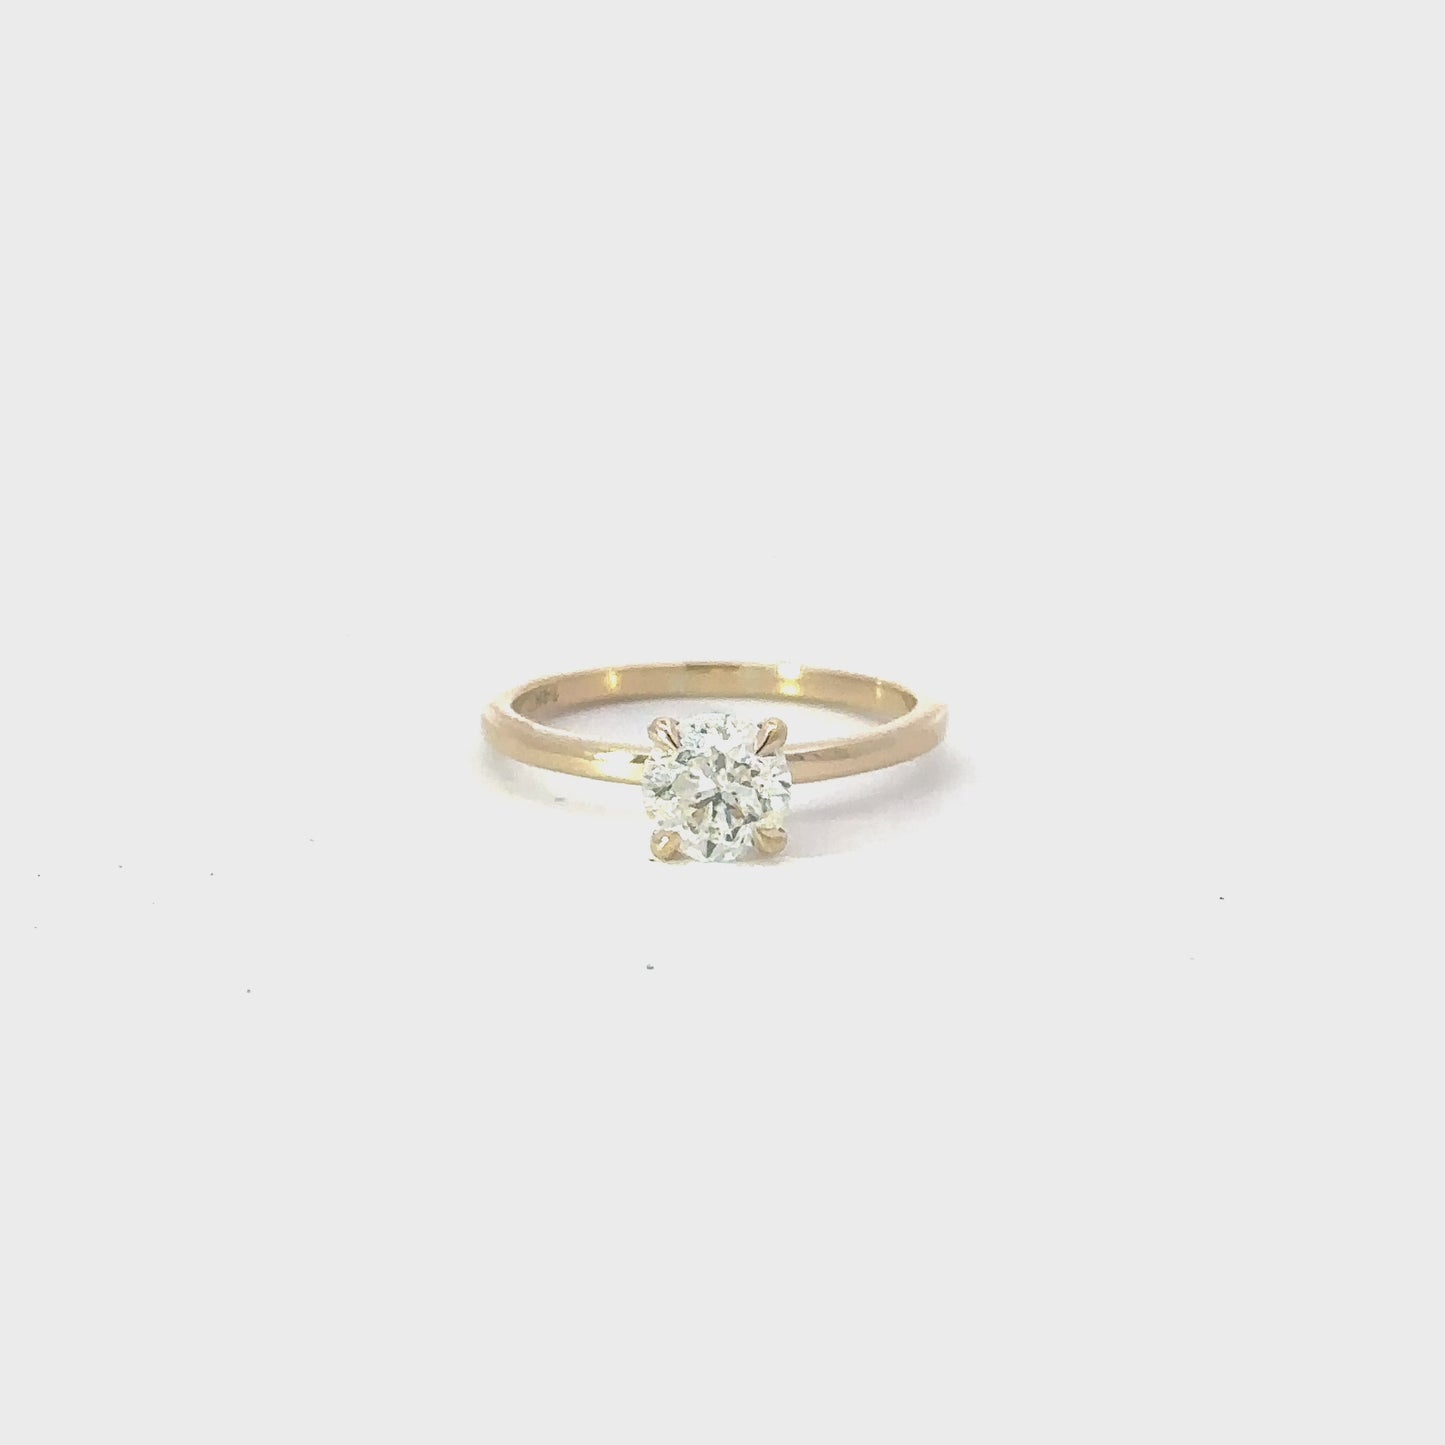 1.01 Carat Natural Round Diamond Engagement Ring | Engagement Ring Wednesday